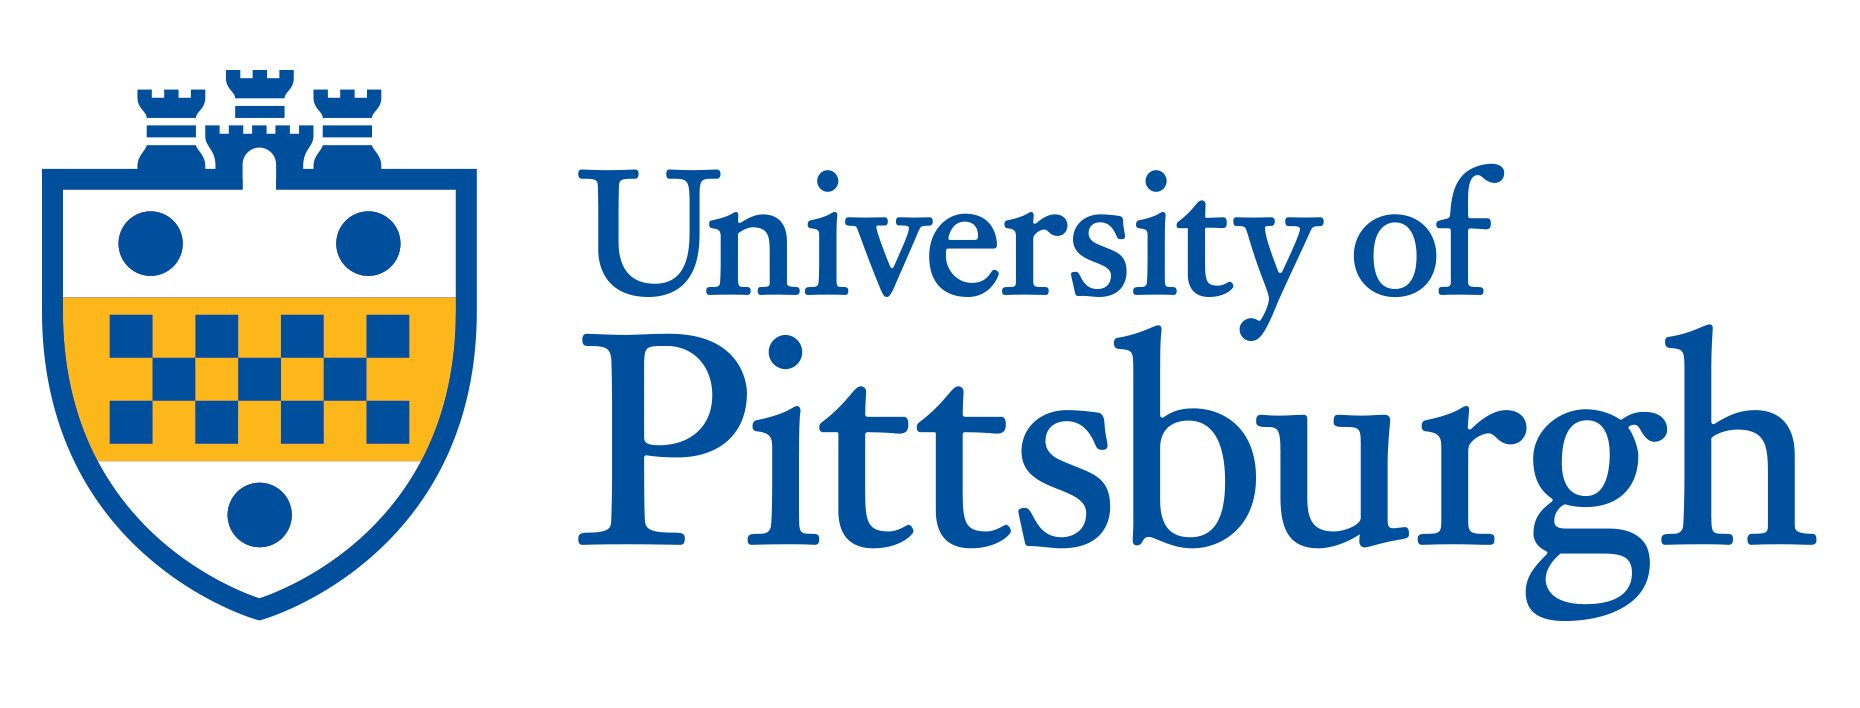 University of Pittsburgh Logo Image.